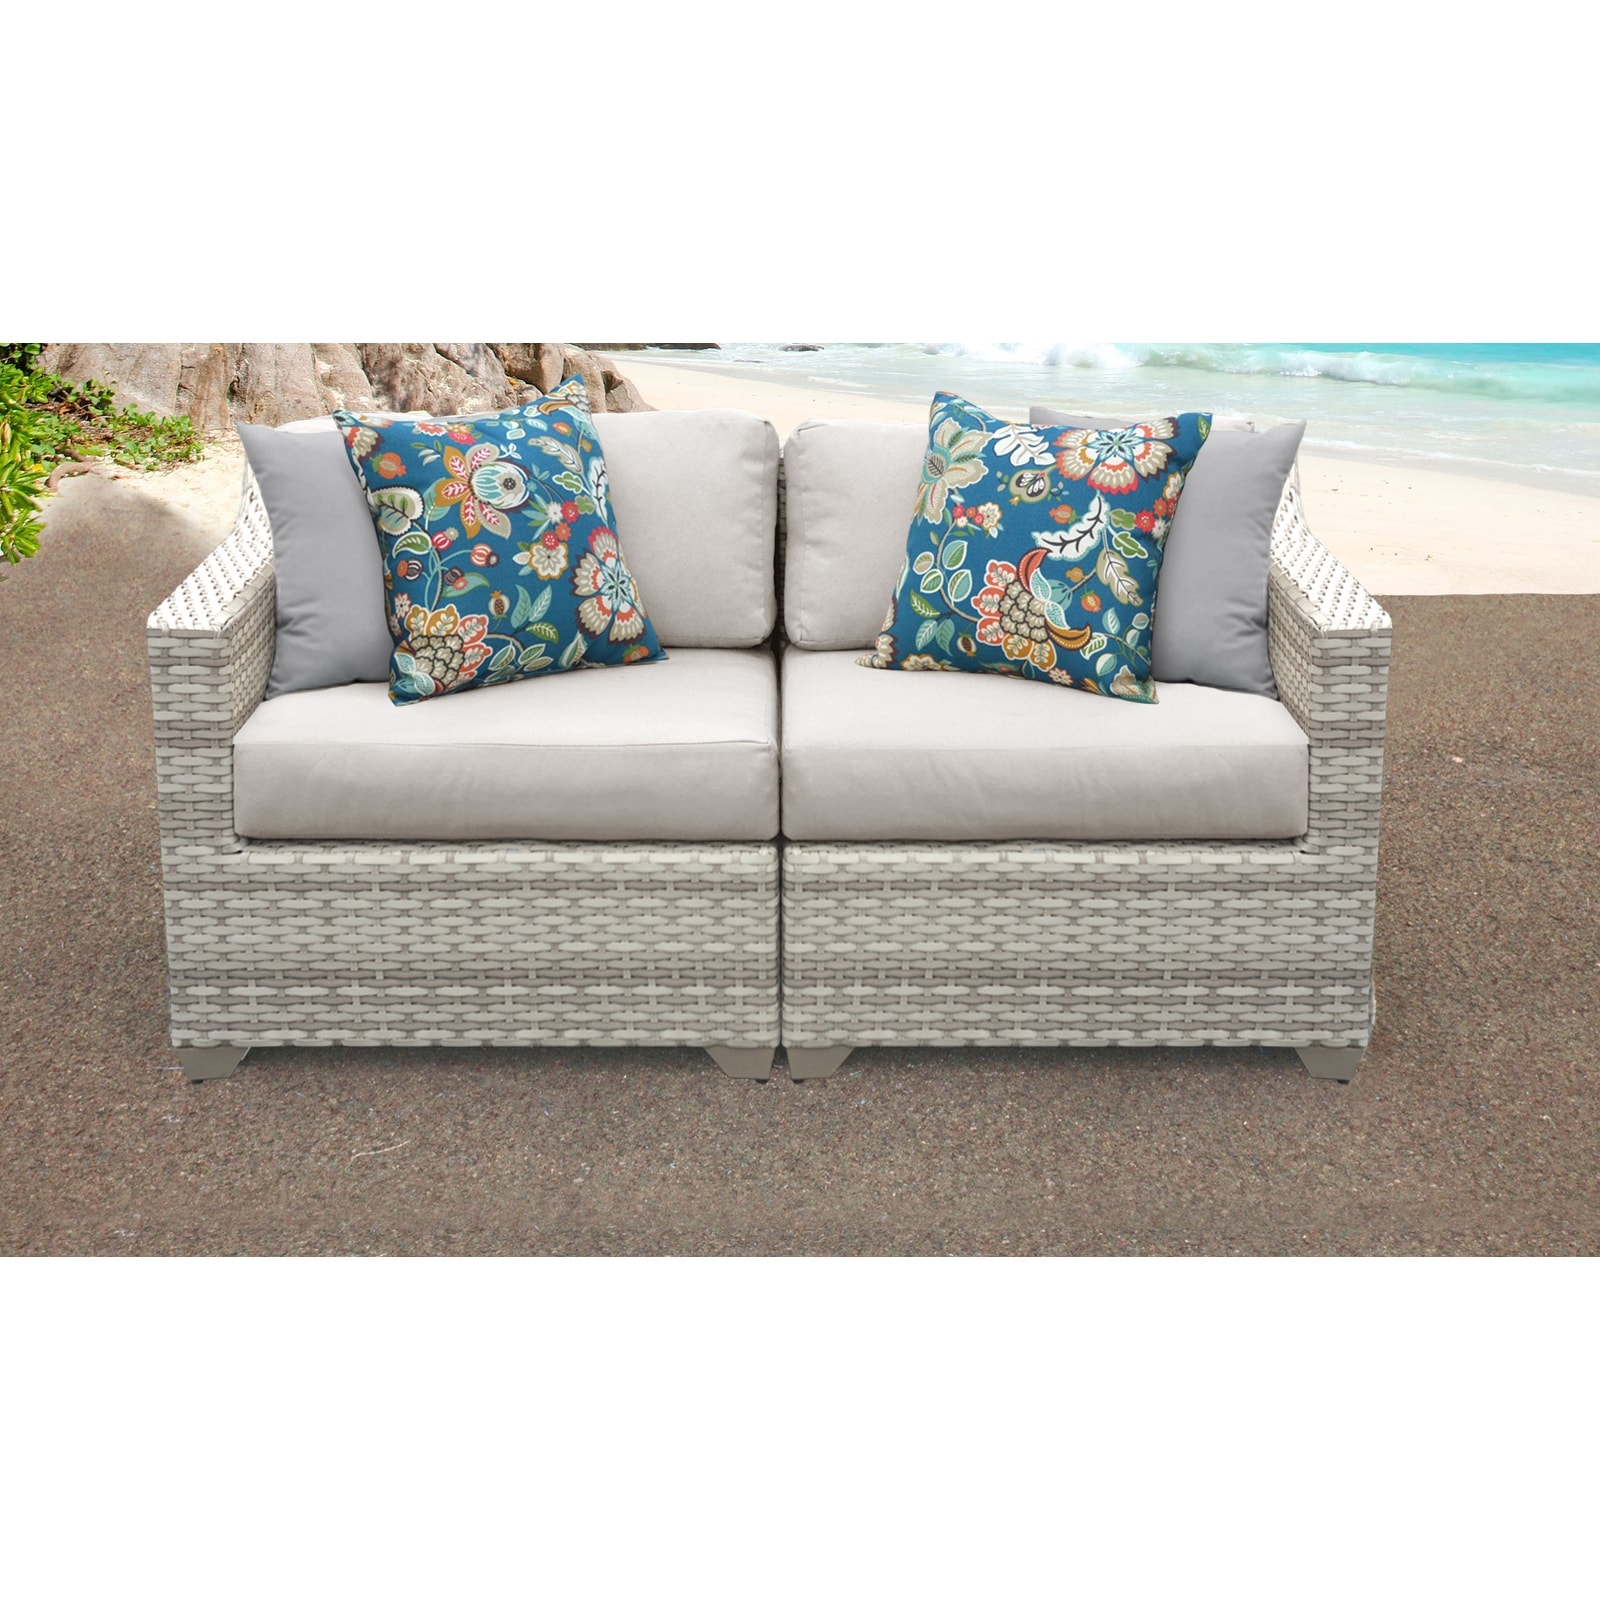 Fairmont 2-pc. Outdoor Wicker Furniture Set